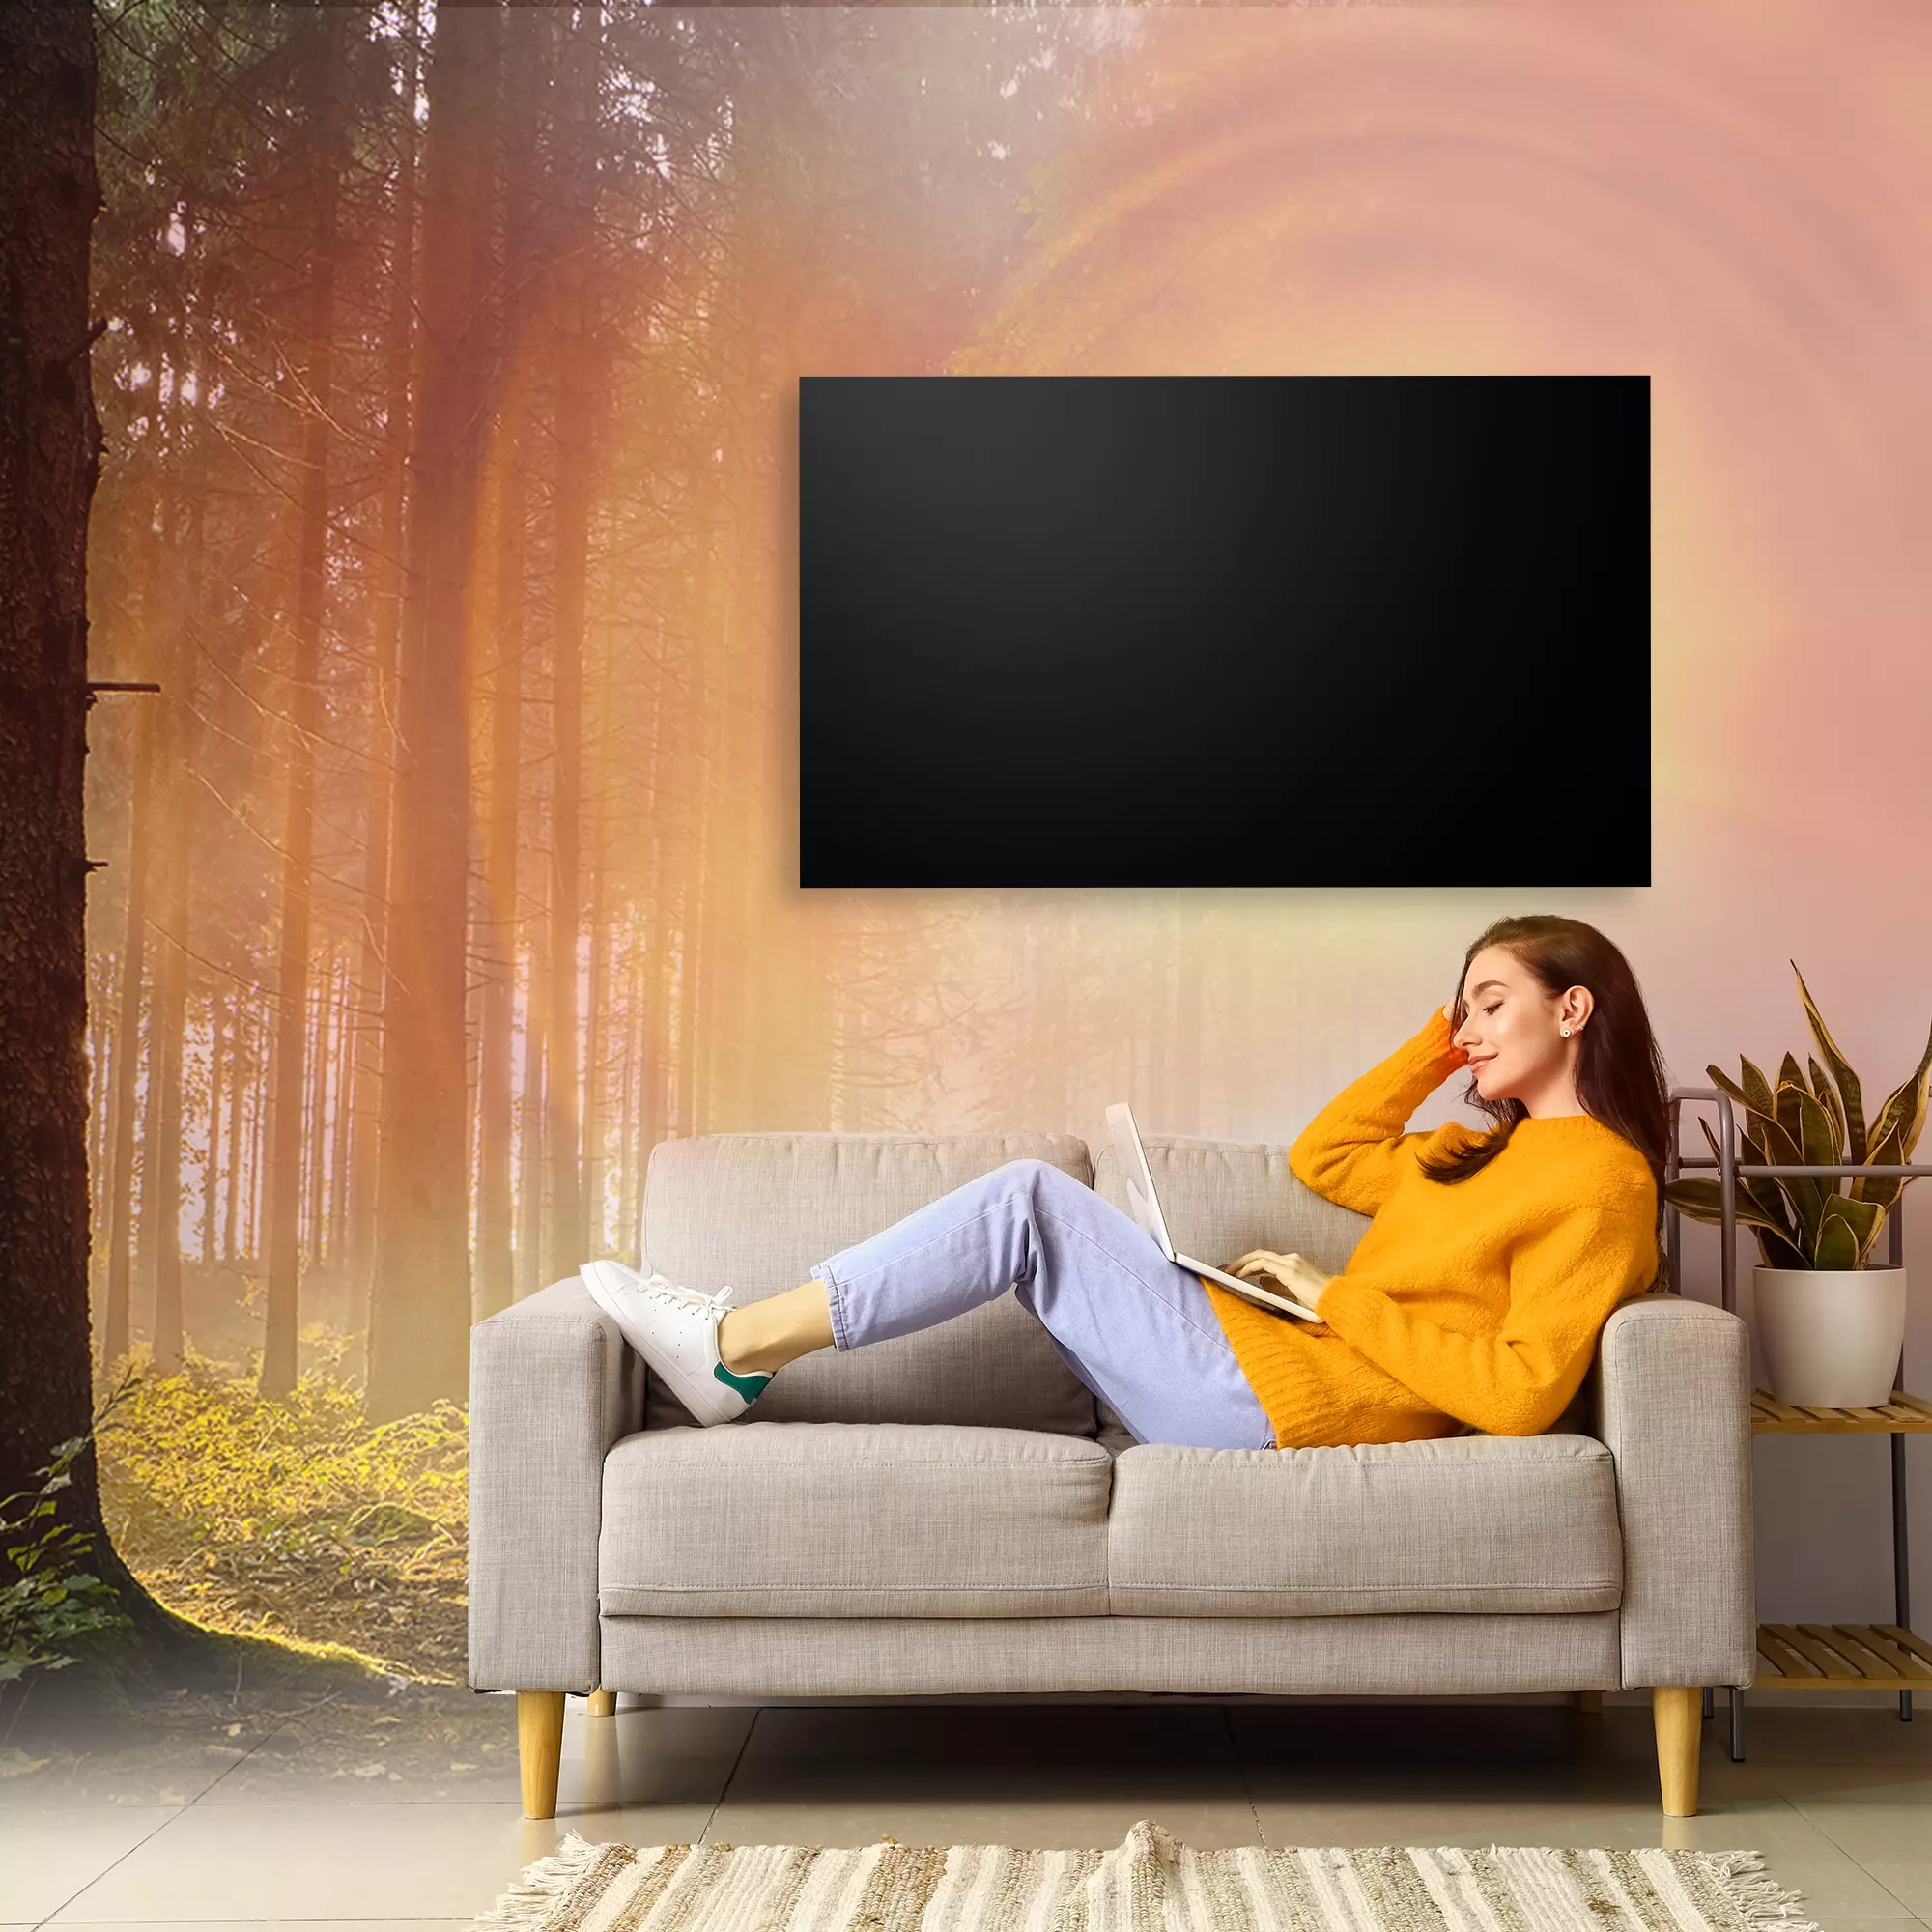 Heidenfeld Infrarotheizung in Schwarz an Wand, Frau genießt Wärme auf Sofa